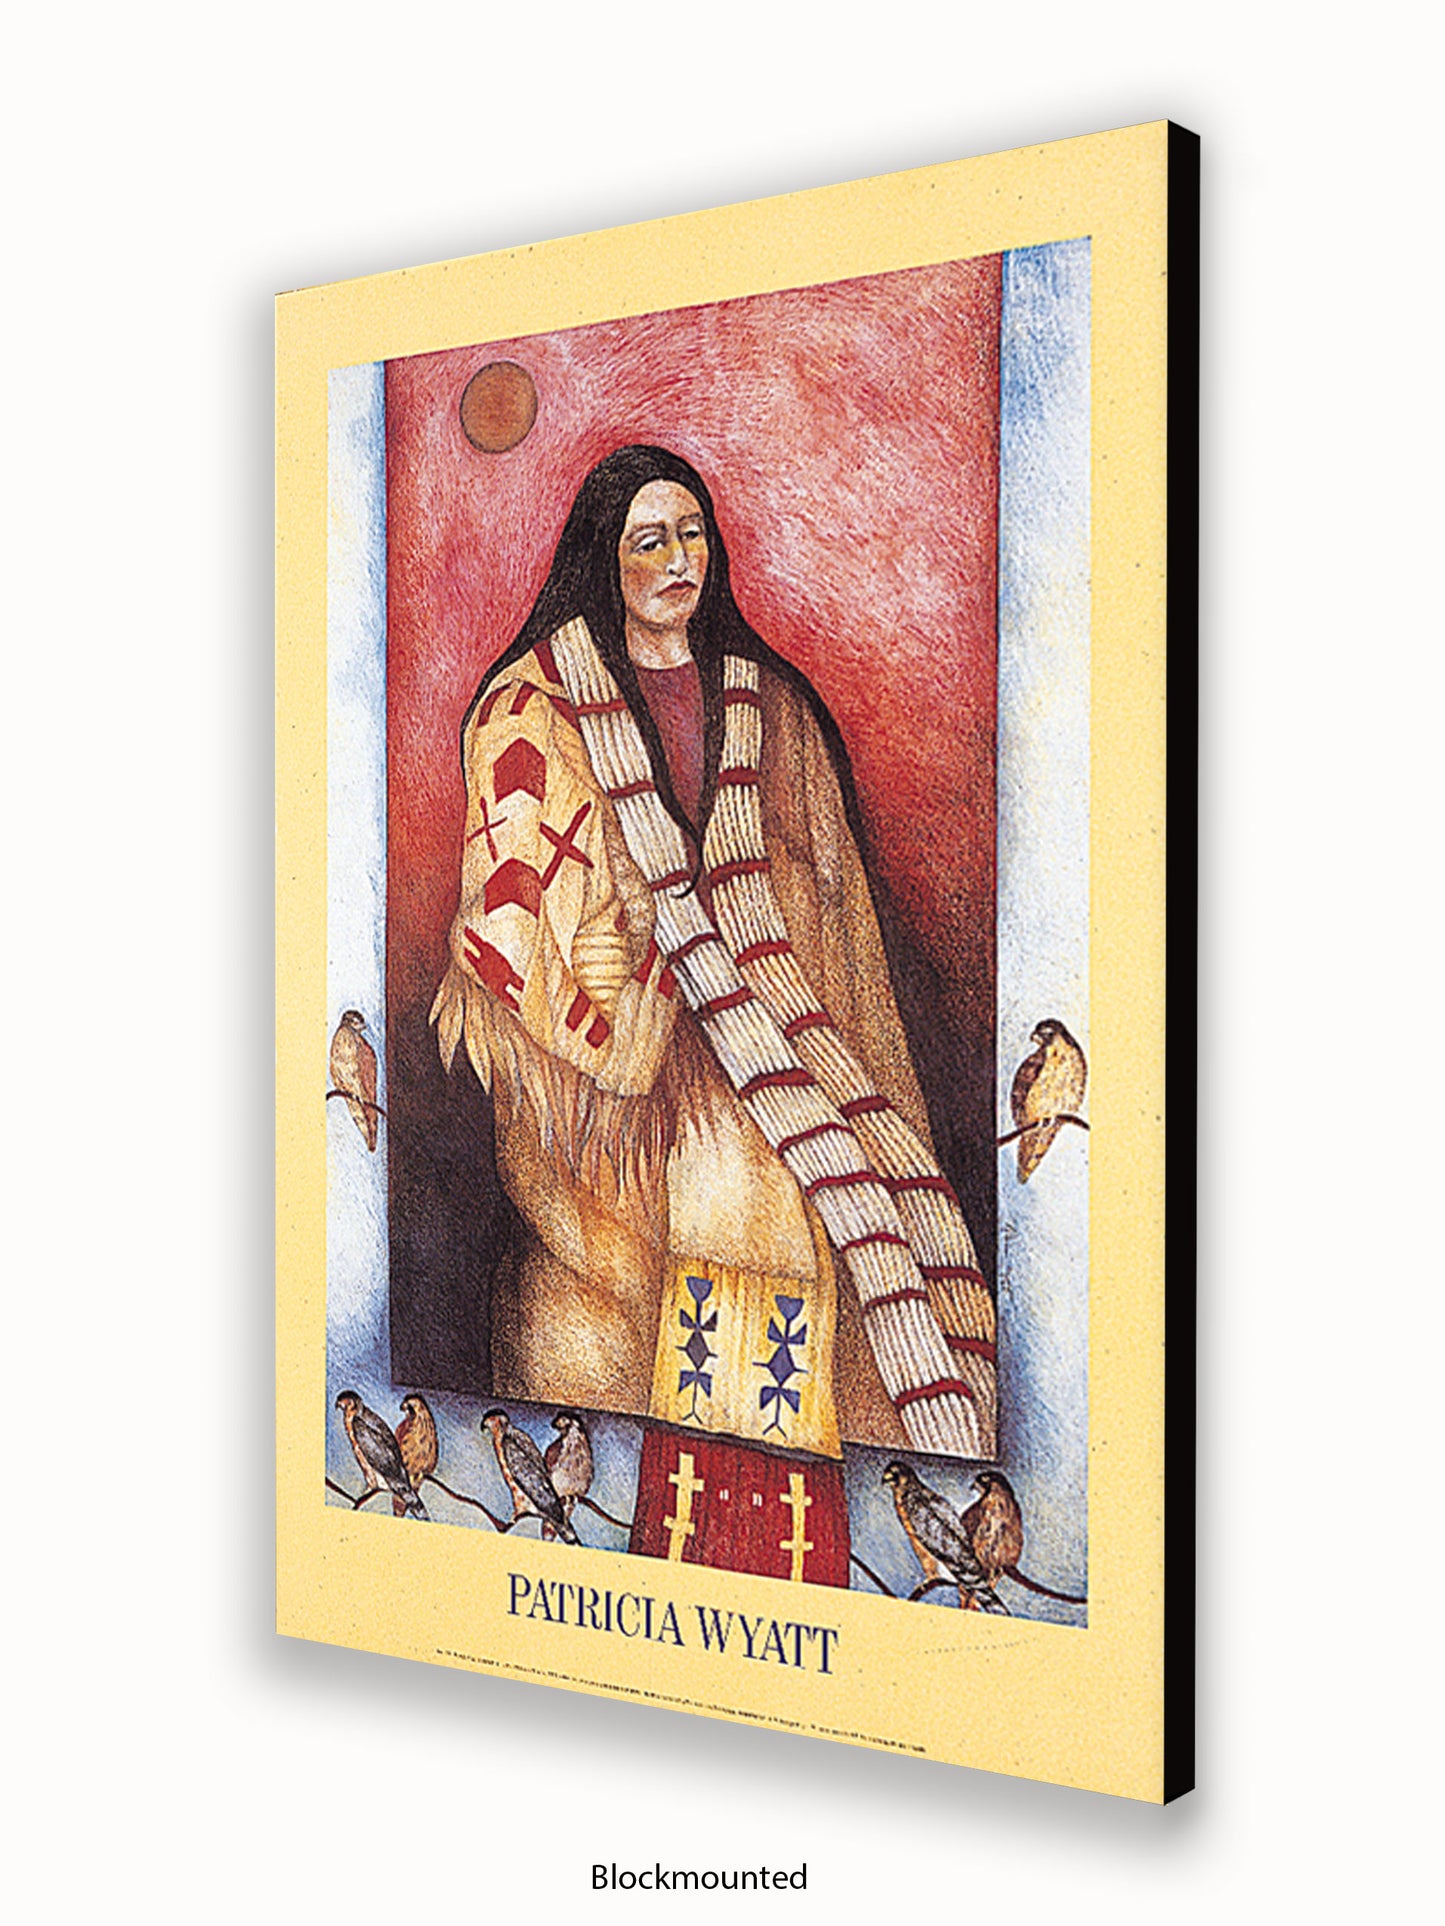 Native American Indian Patricia Wyatt Grey Hawk Dreamer Poster